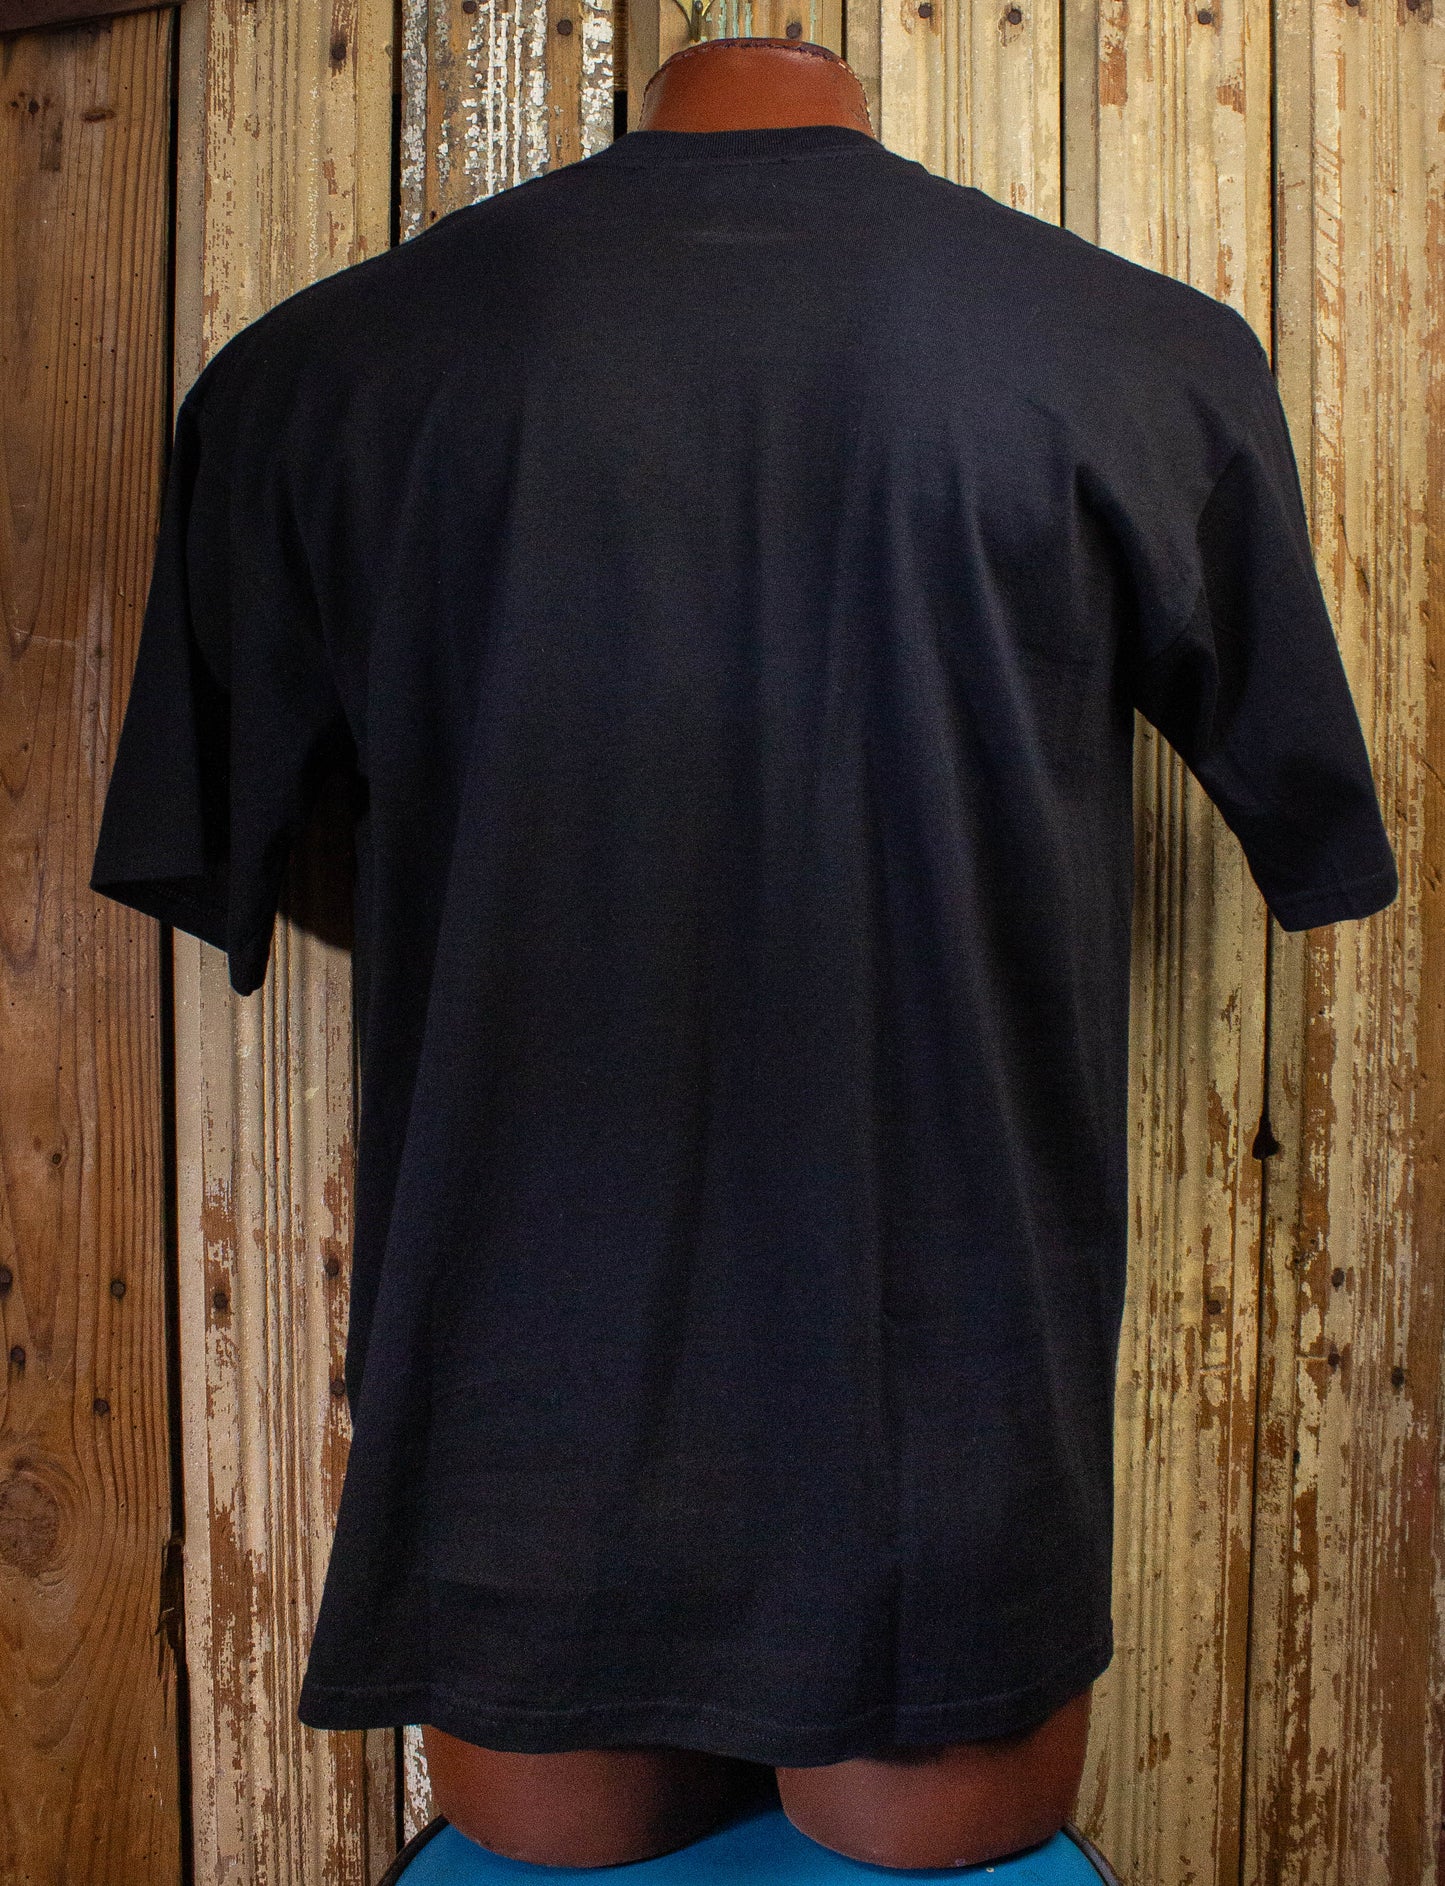 Vintage XFL Los Angeles Xtreme Graphic T Shirt 2001 Black XL